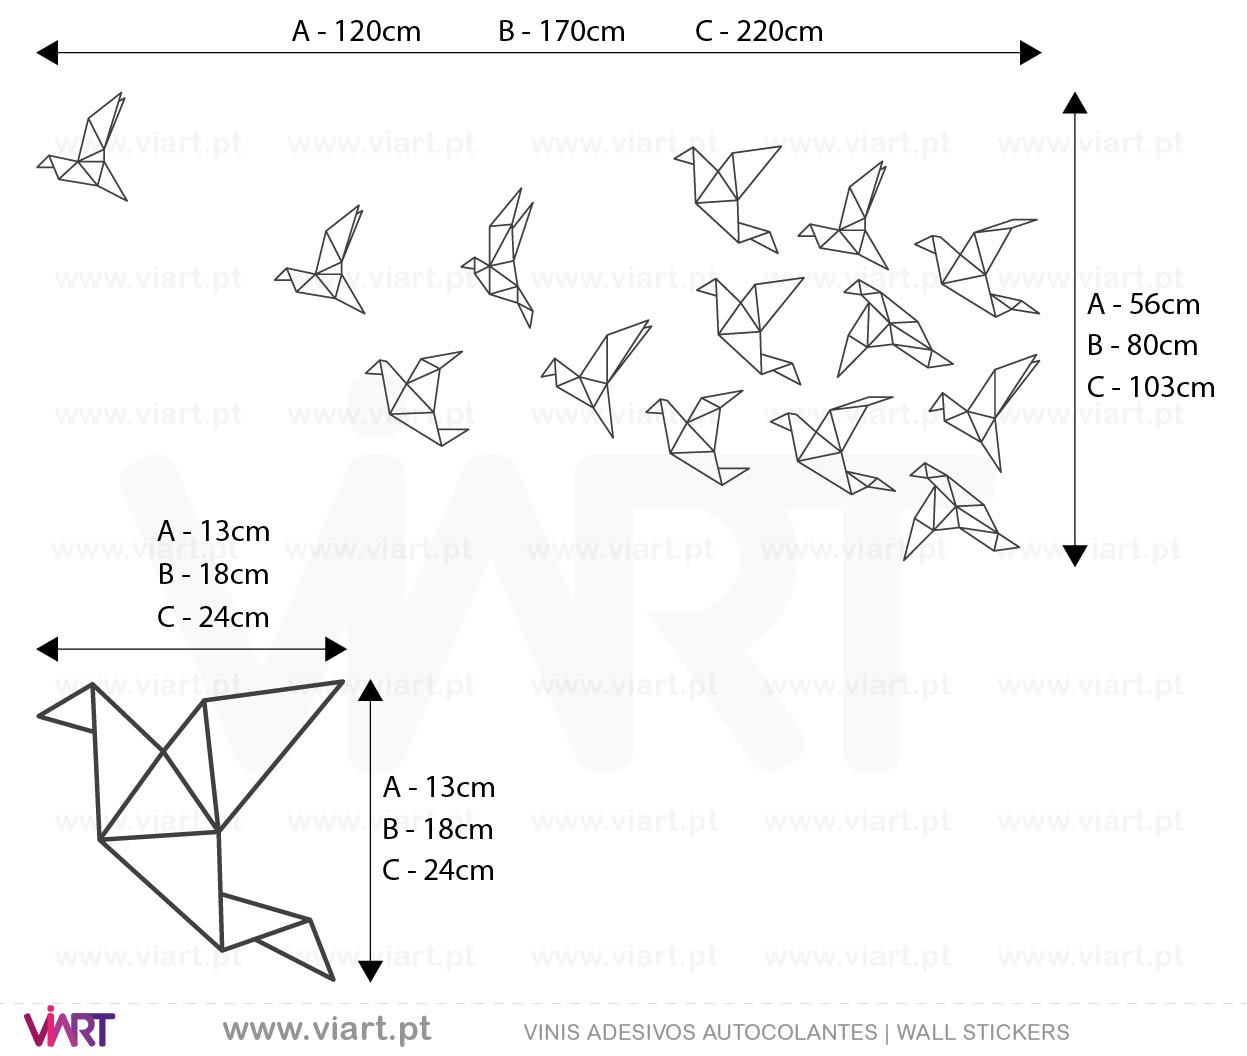 Viart - WALL STICKERS - Geometric Flock of Birds Decal! Origami! Medidas